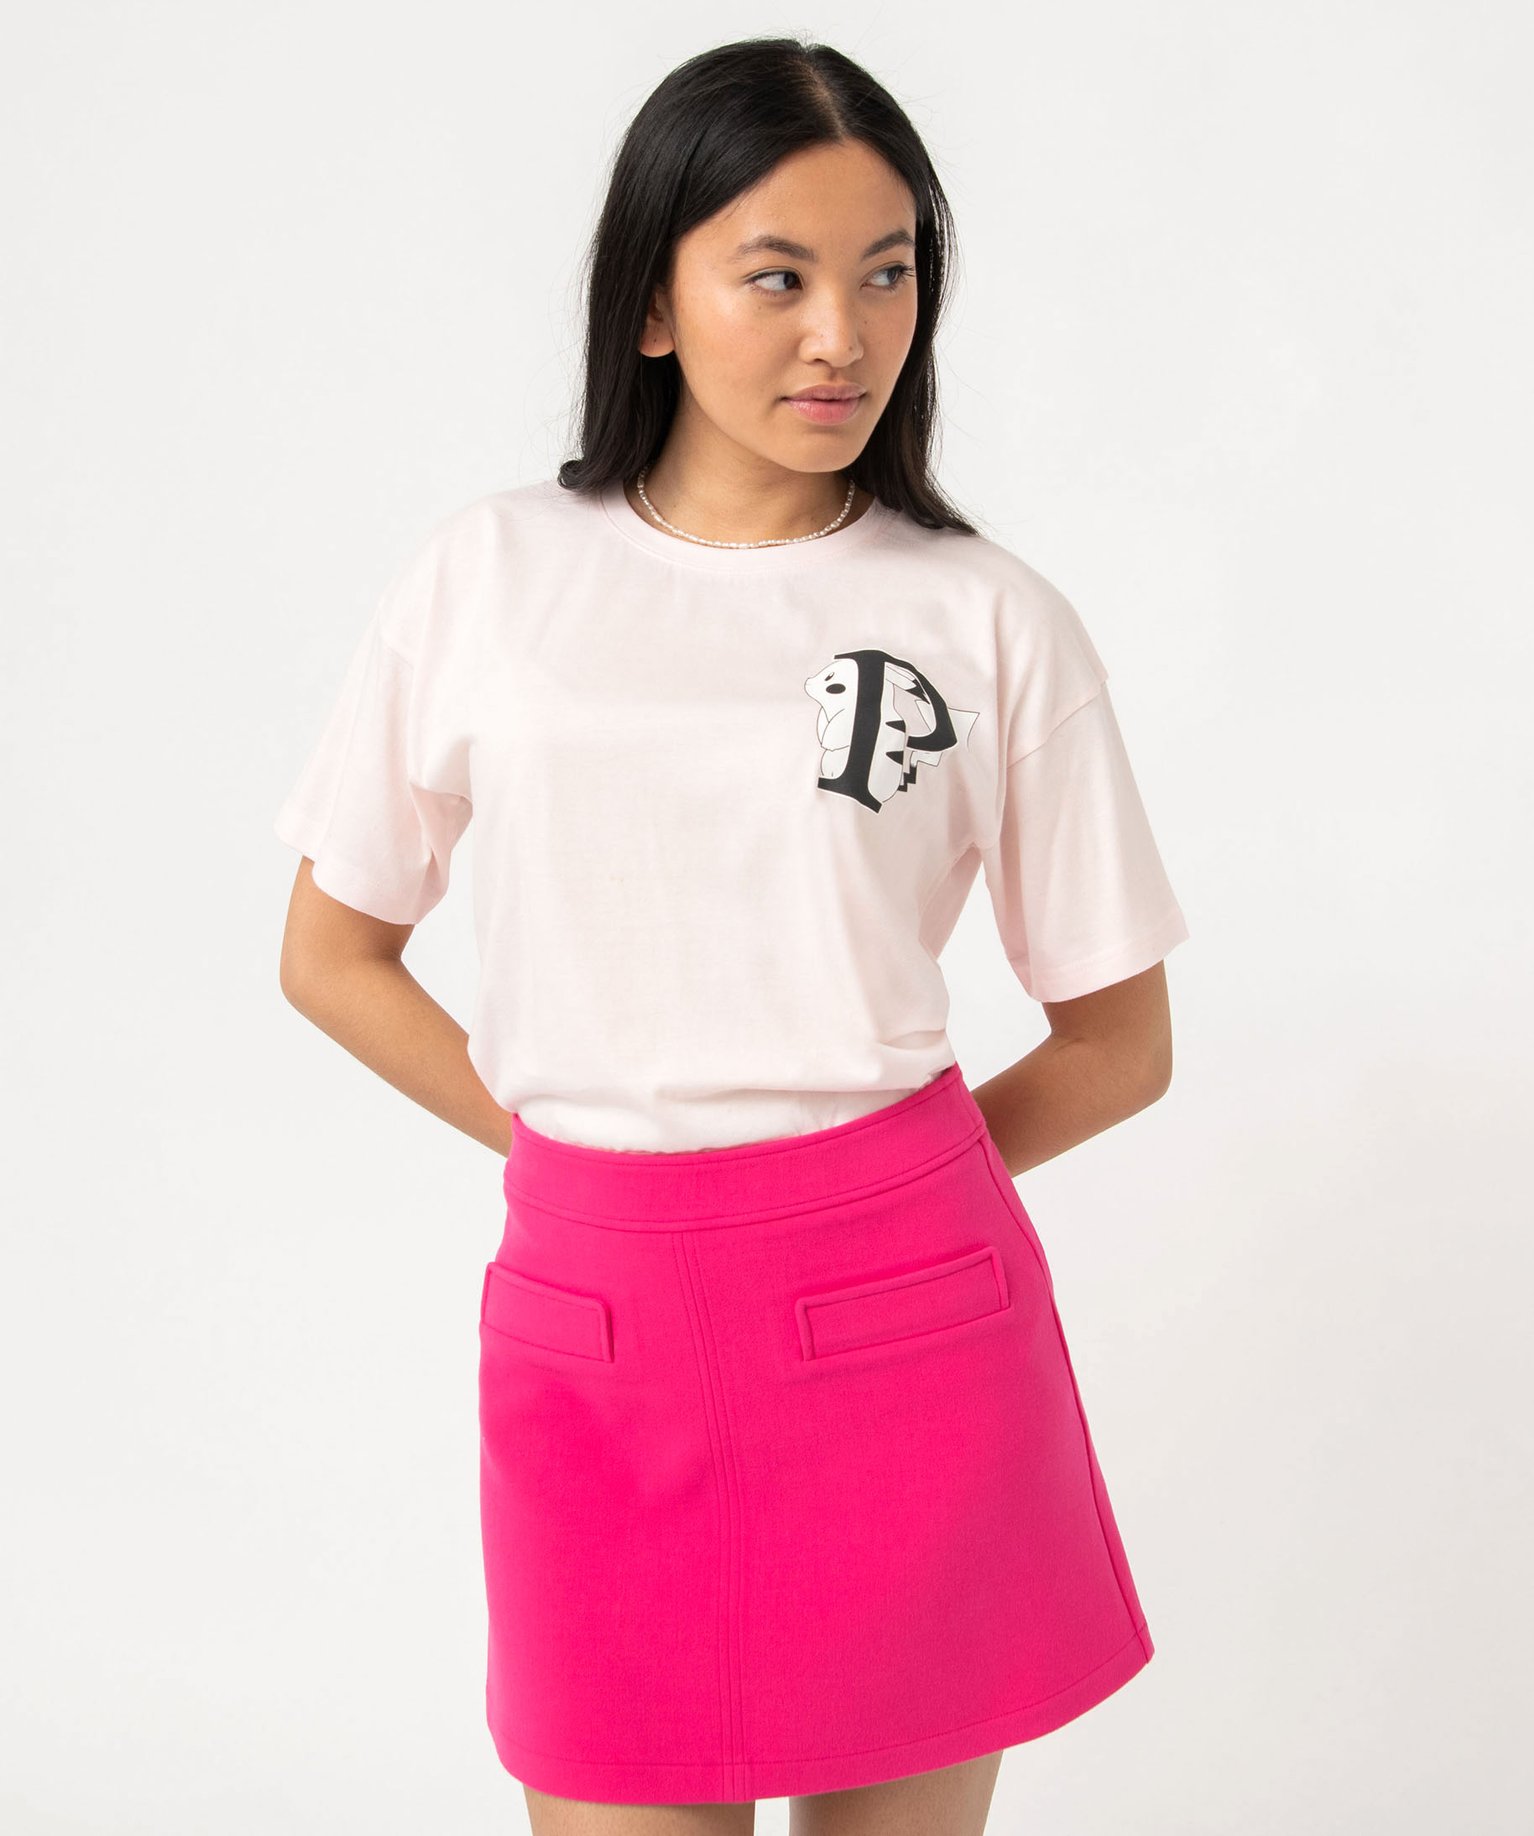 tee-shirt a manches courtes motif pikachu femme - pokemon rose t-shirts manches courtes